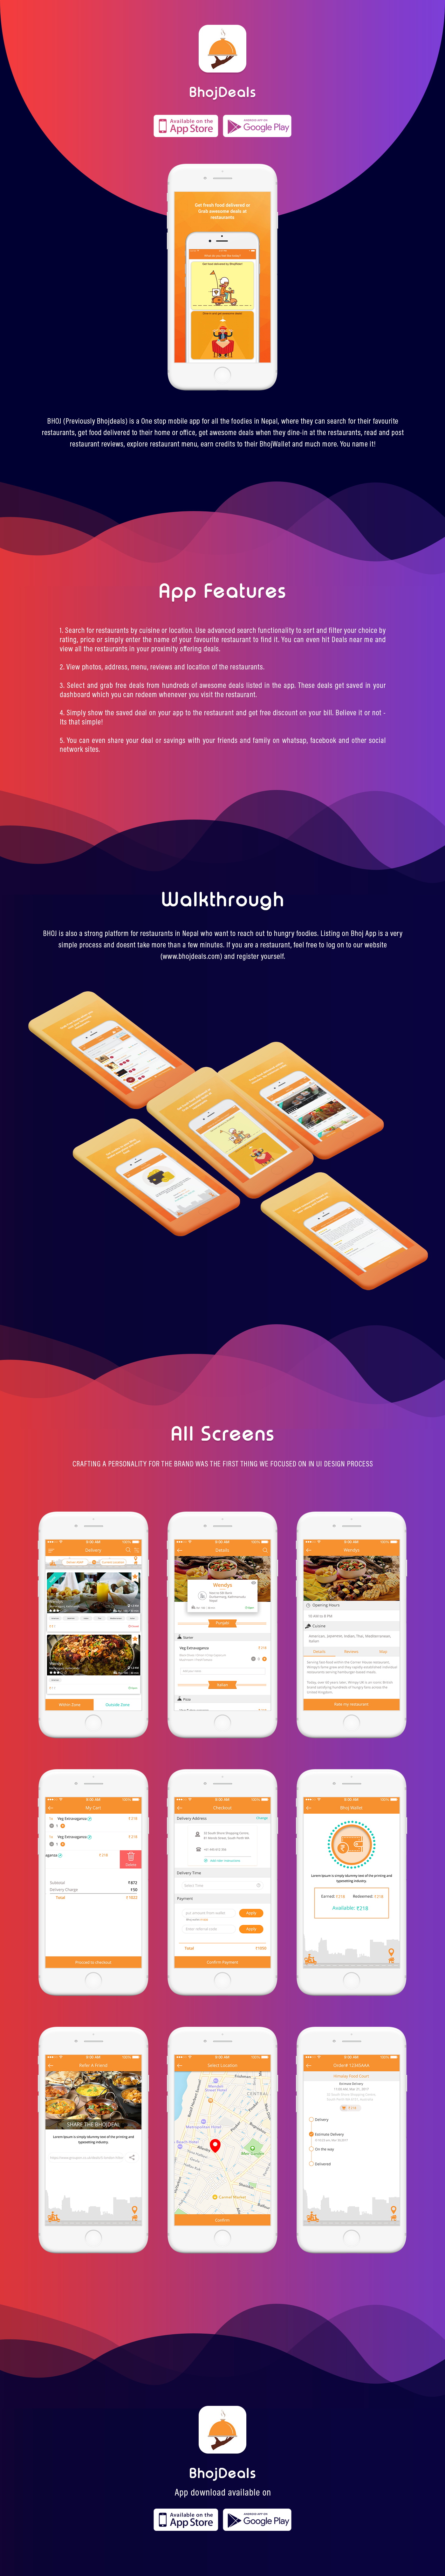 iphone app Android App food app deal app UI ux UX design app design Mobile app user interface